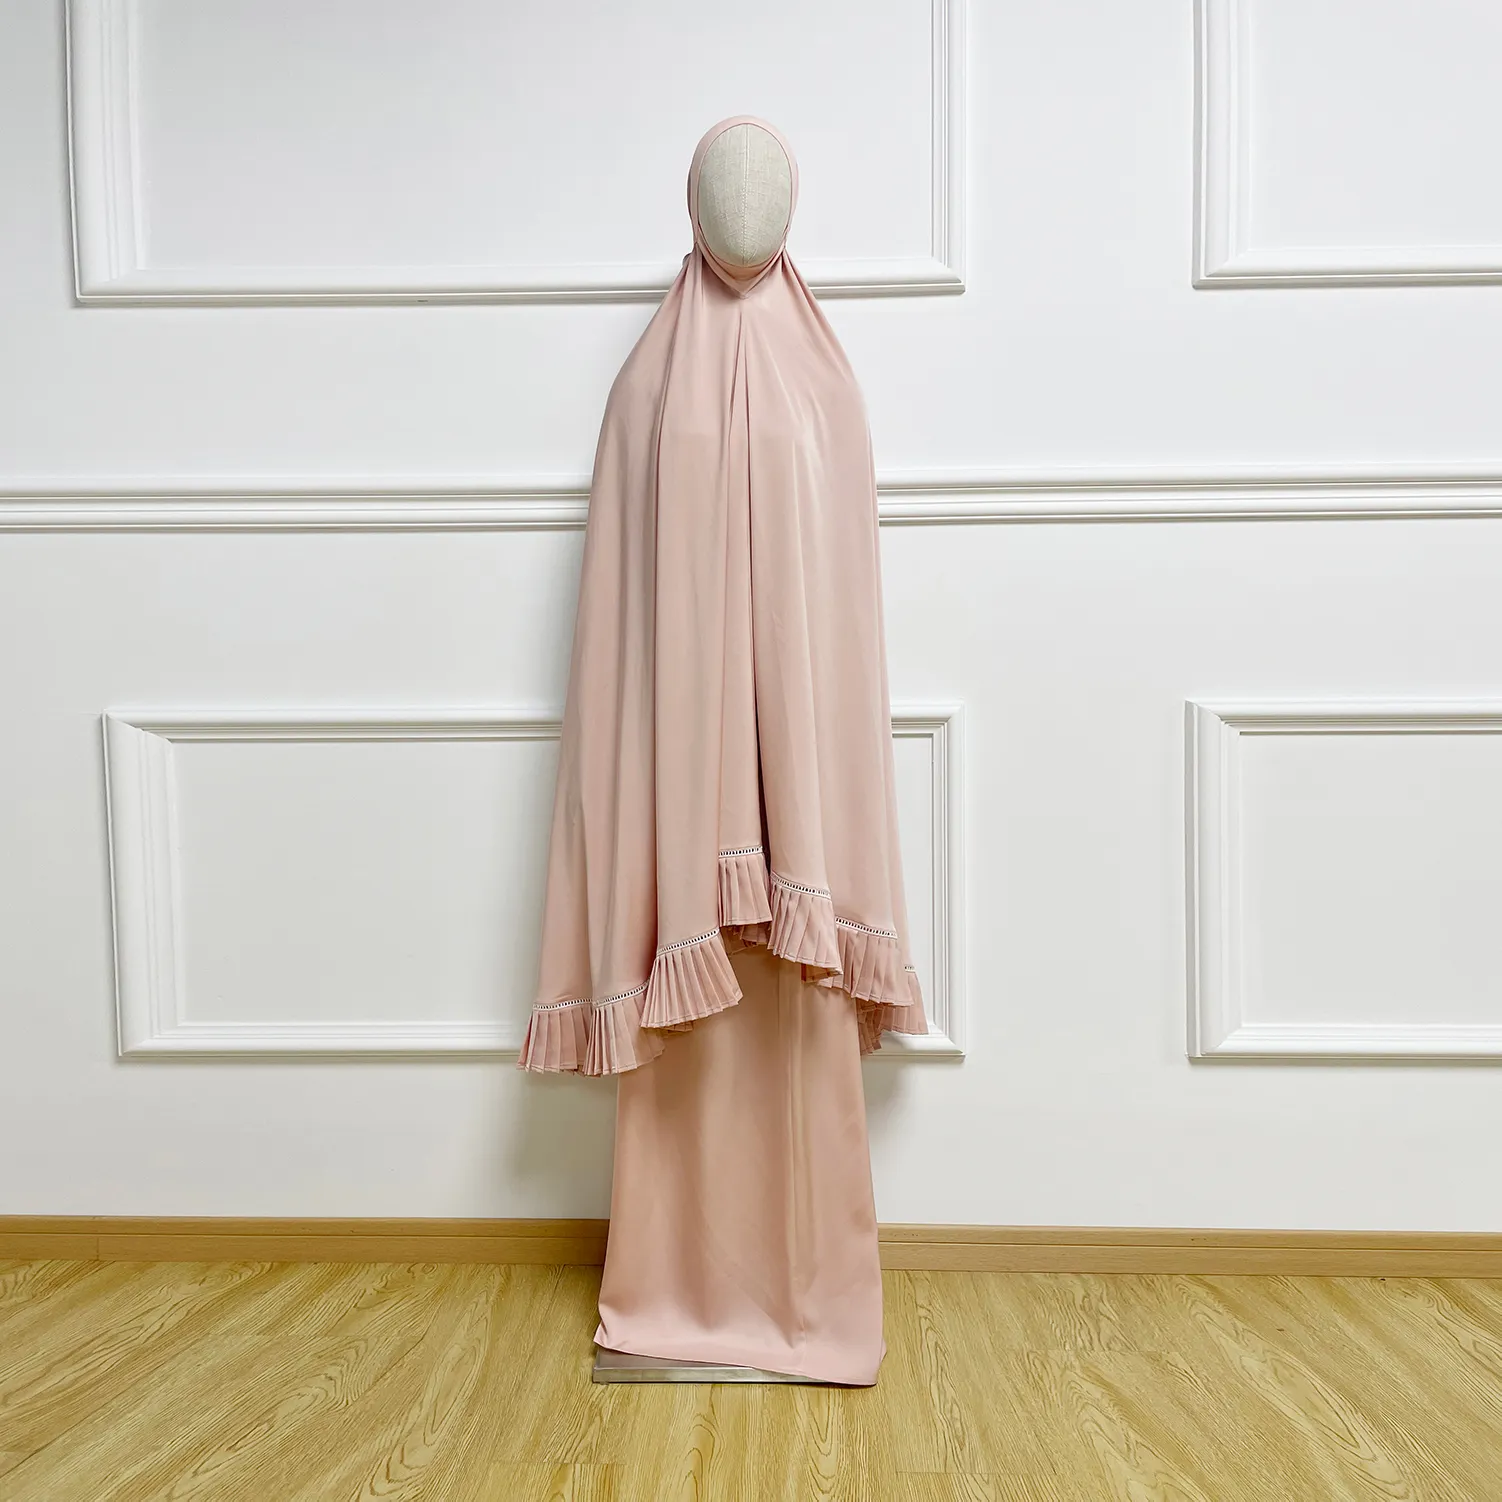 Wholesale New Arrival Women Prayer Hijab Abaya Long Dress